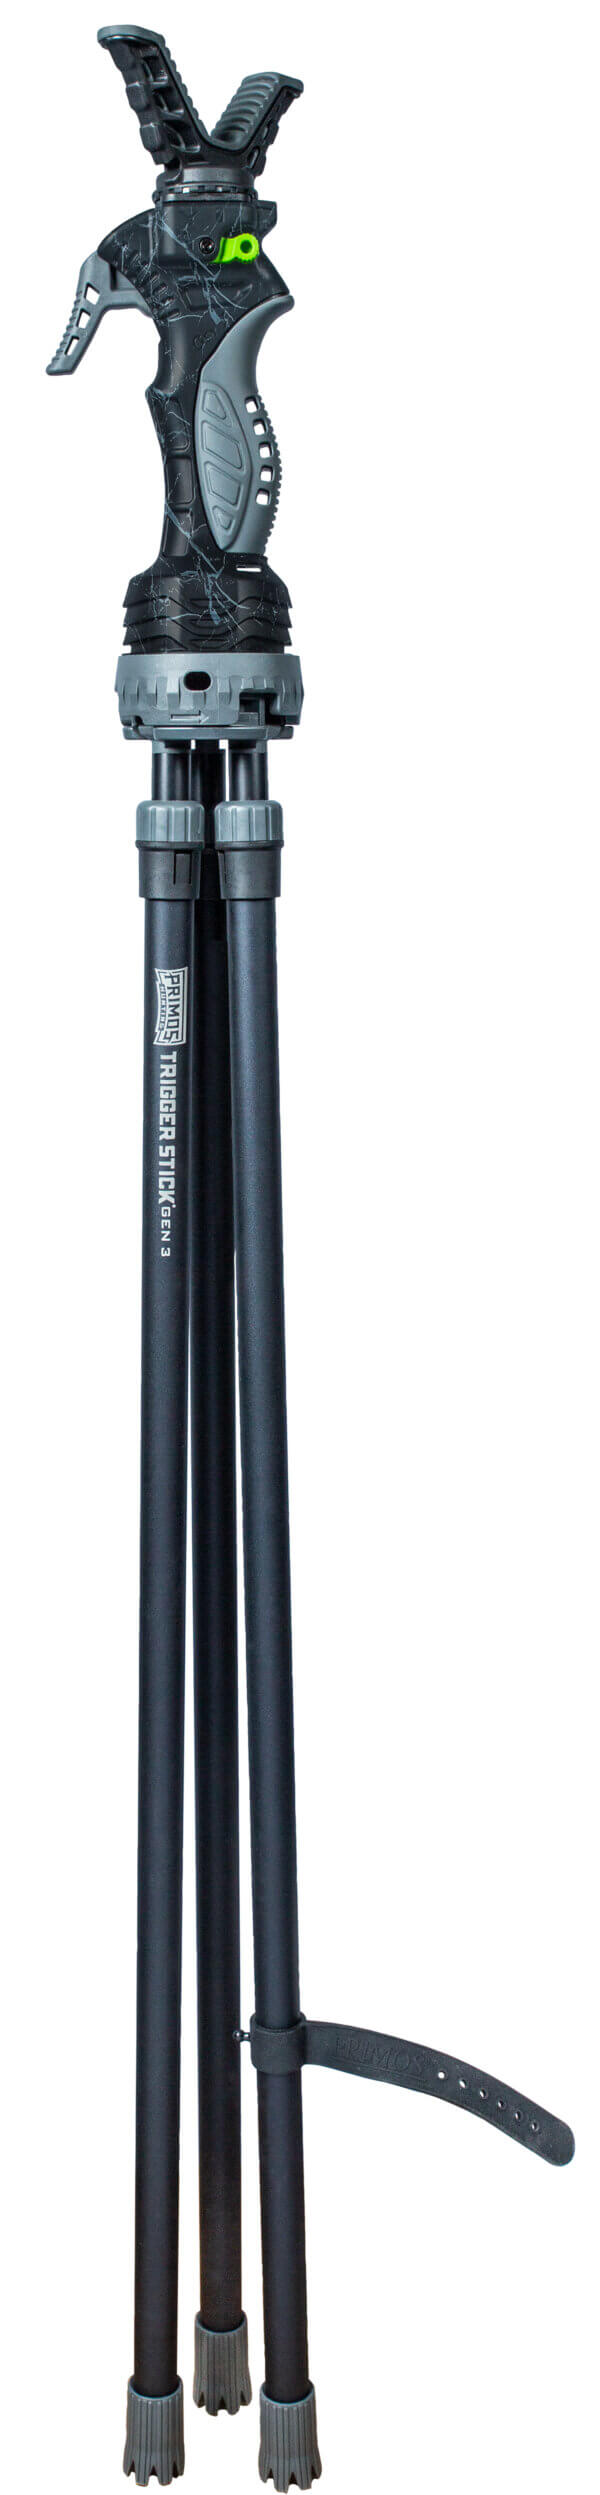 Primos 65821 Trigger Stick Black Onyx Tripod Black 24-62″